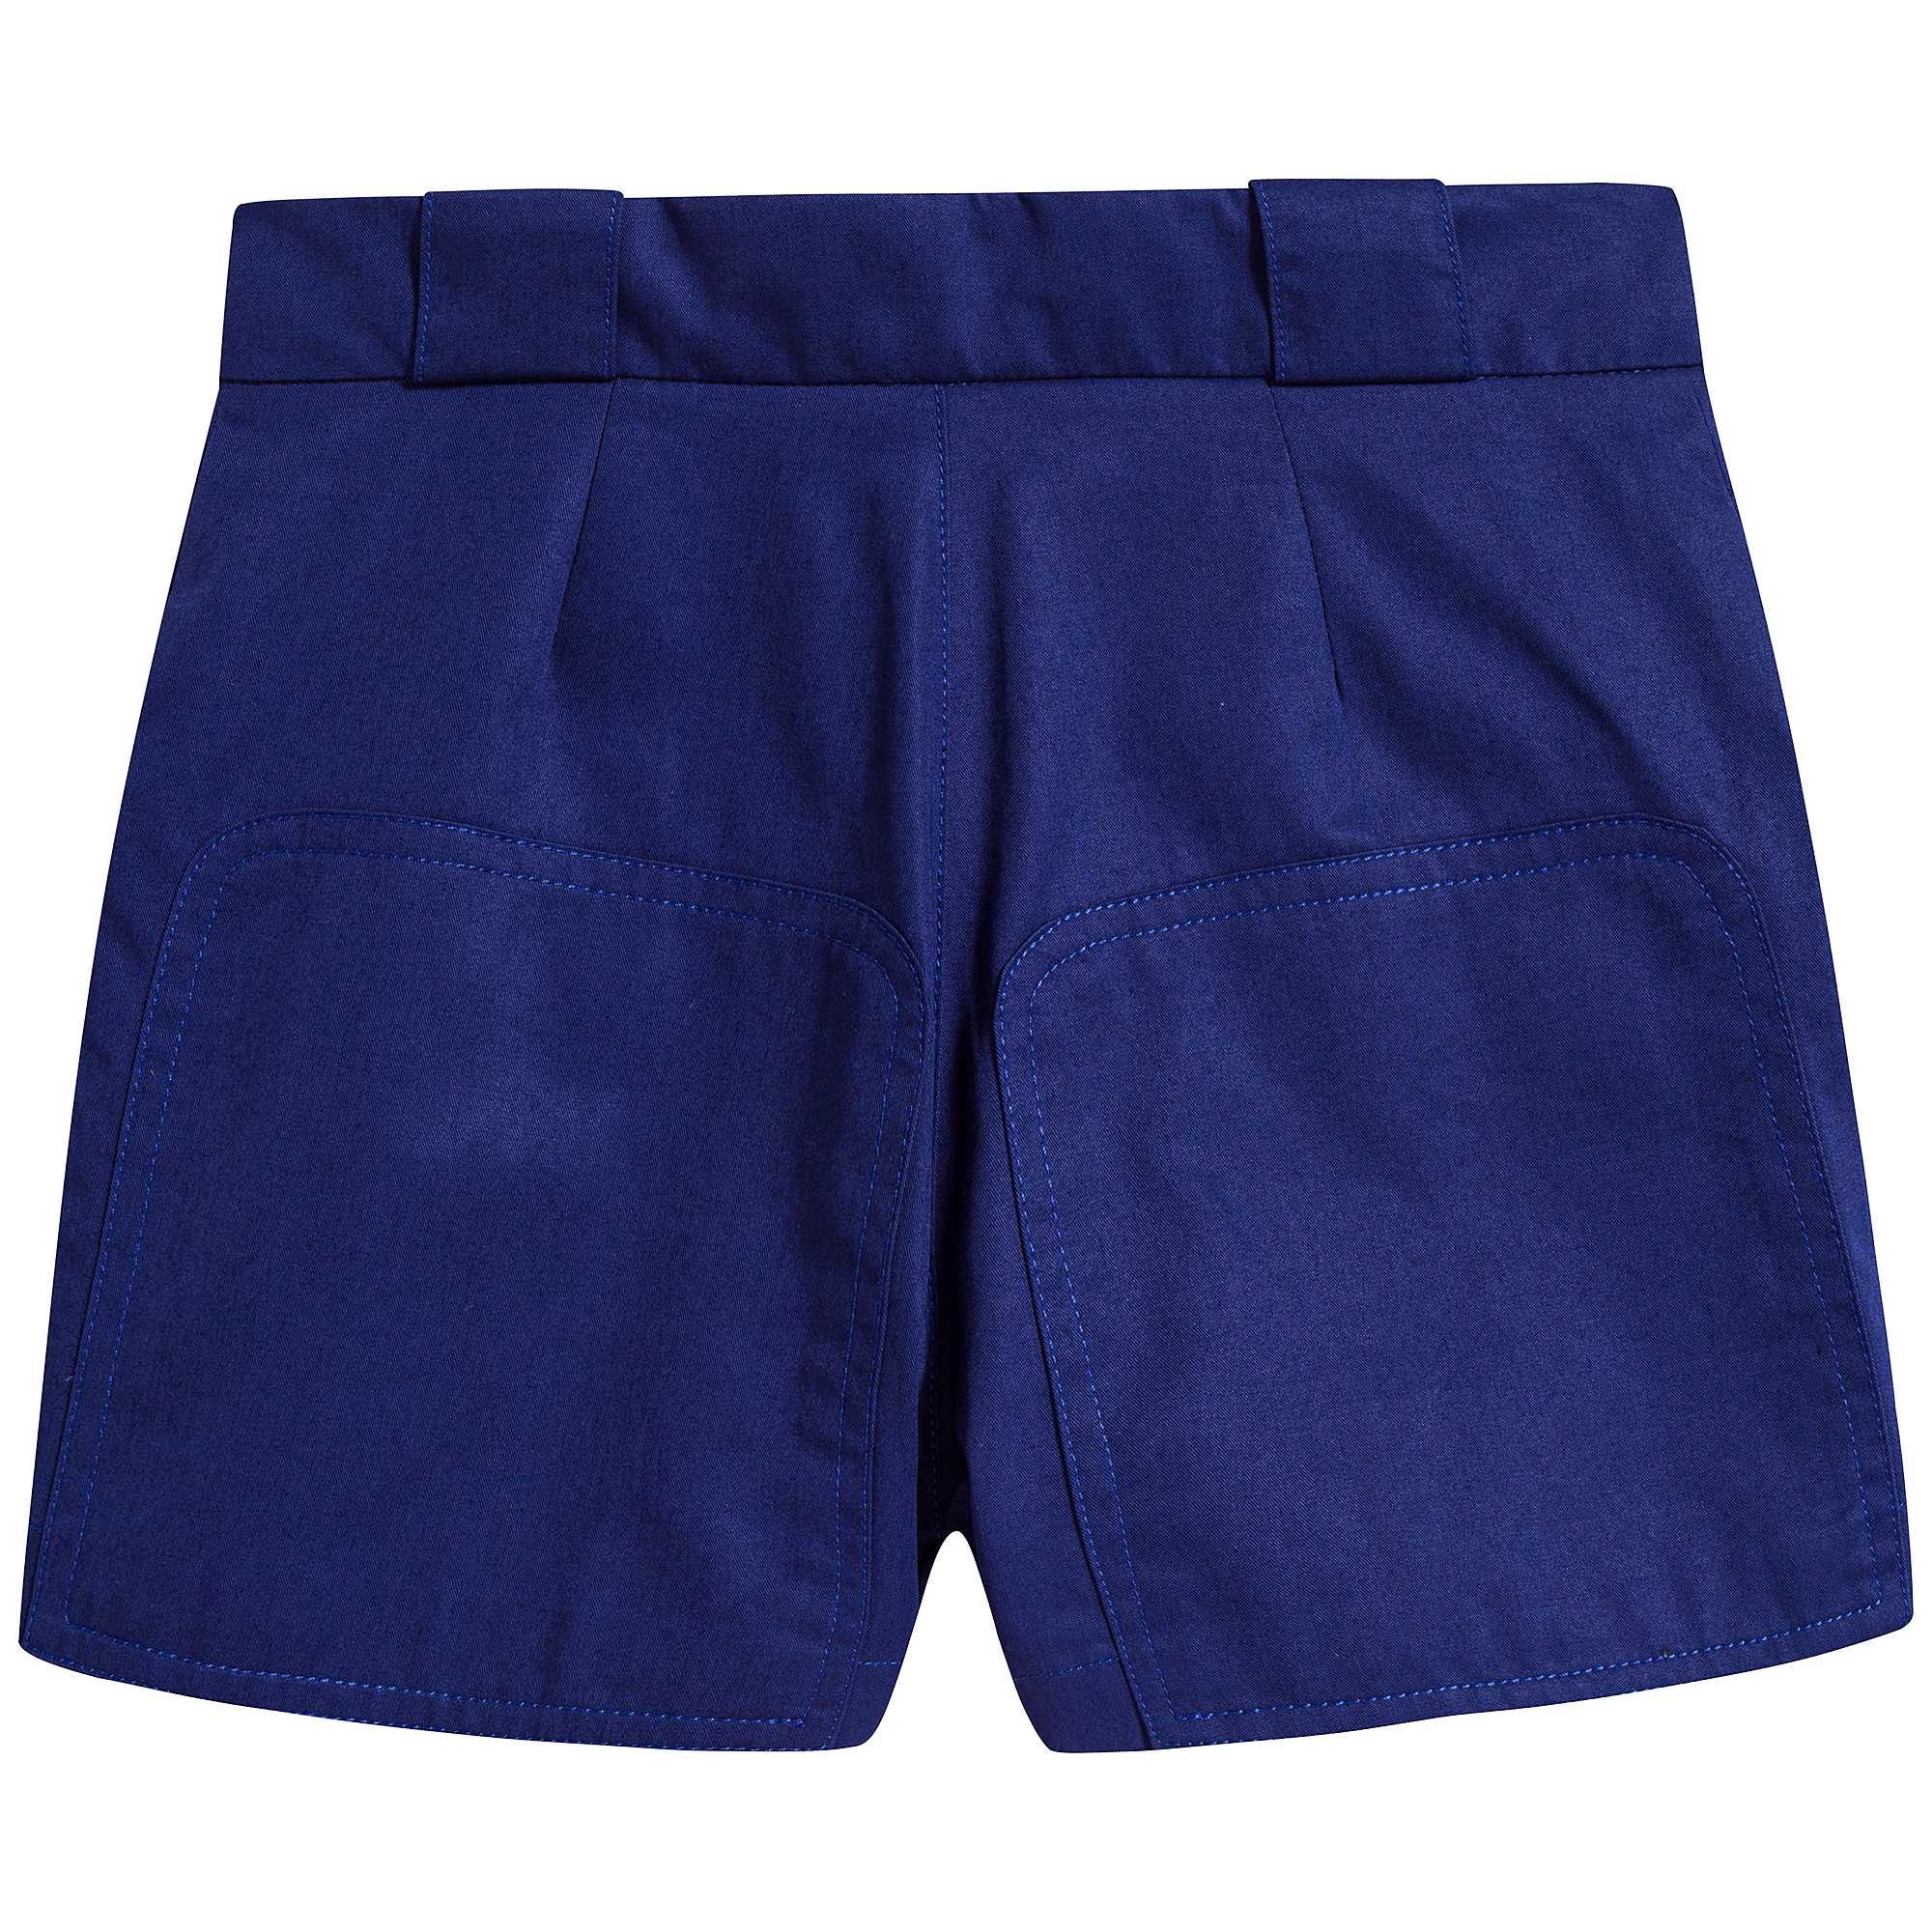 Girls Intense Blue Cotton Shorts